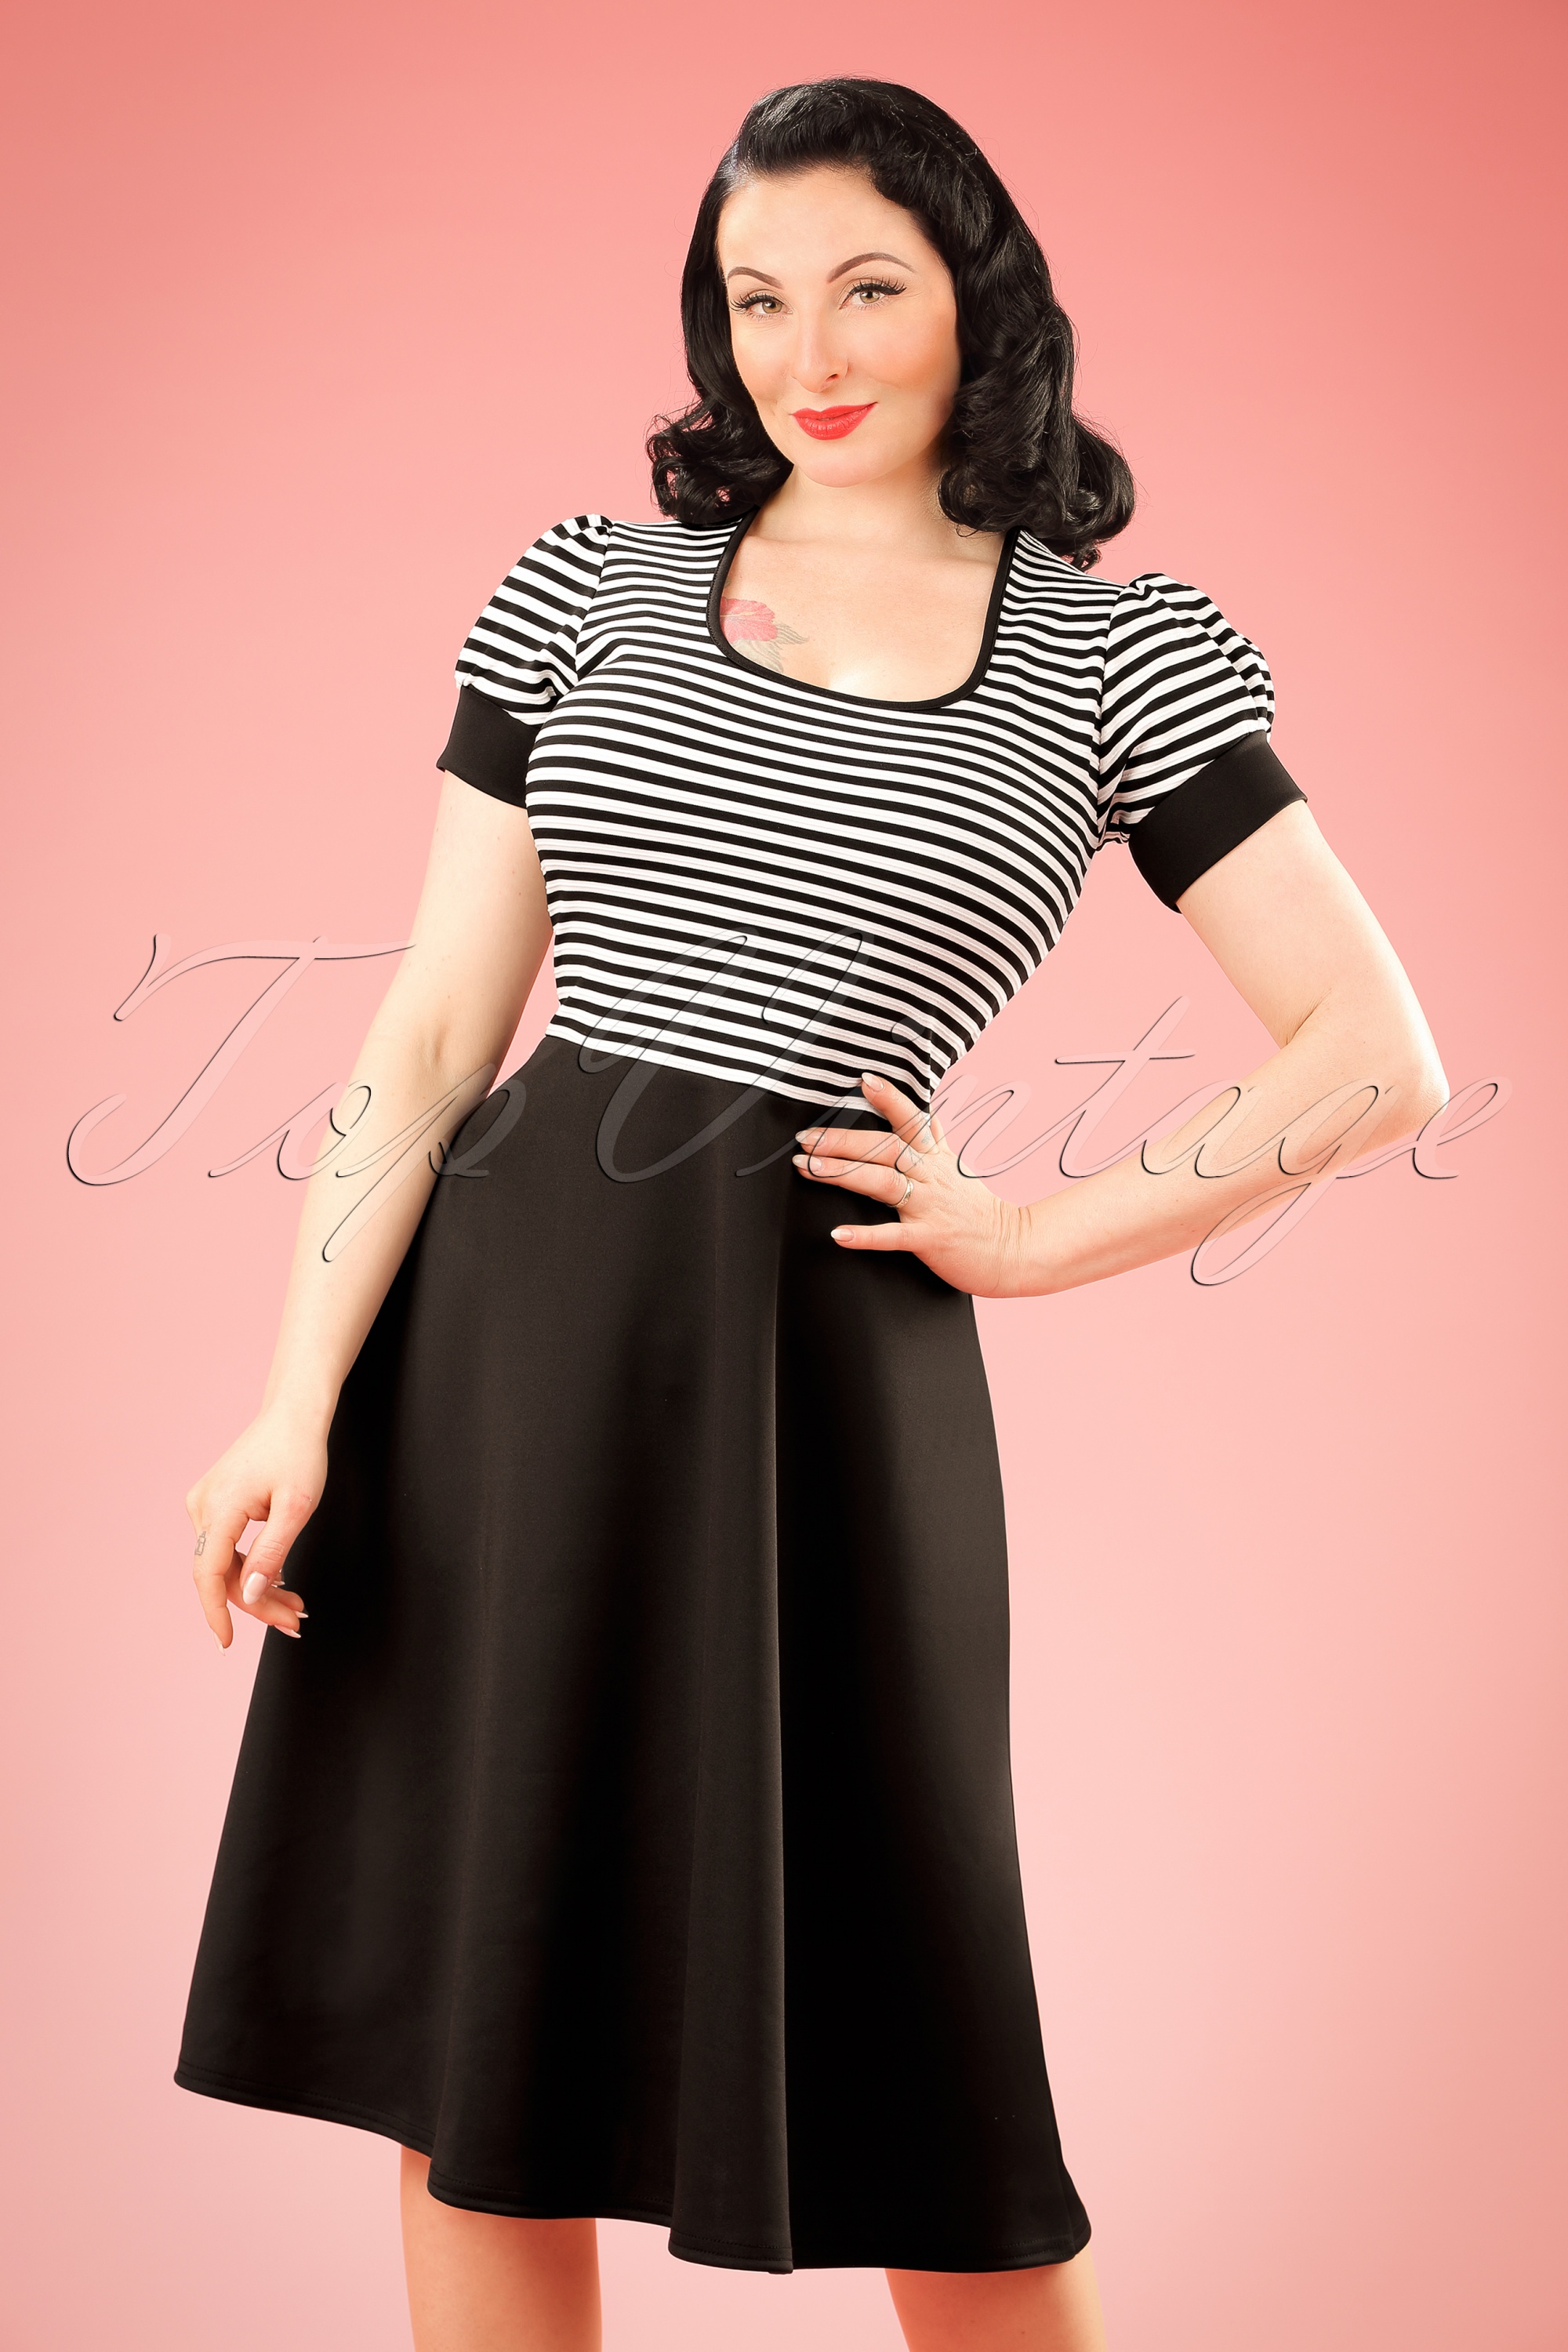 Vintage Chic for Topvintage - Robin Swing-jurk in zwart-witte strepen